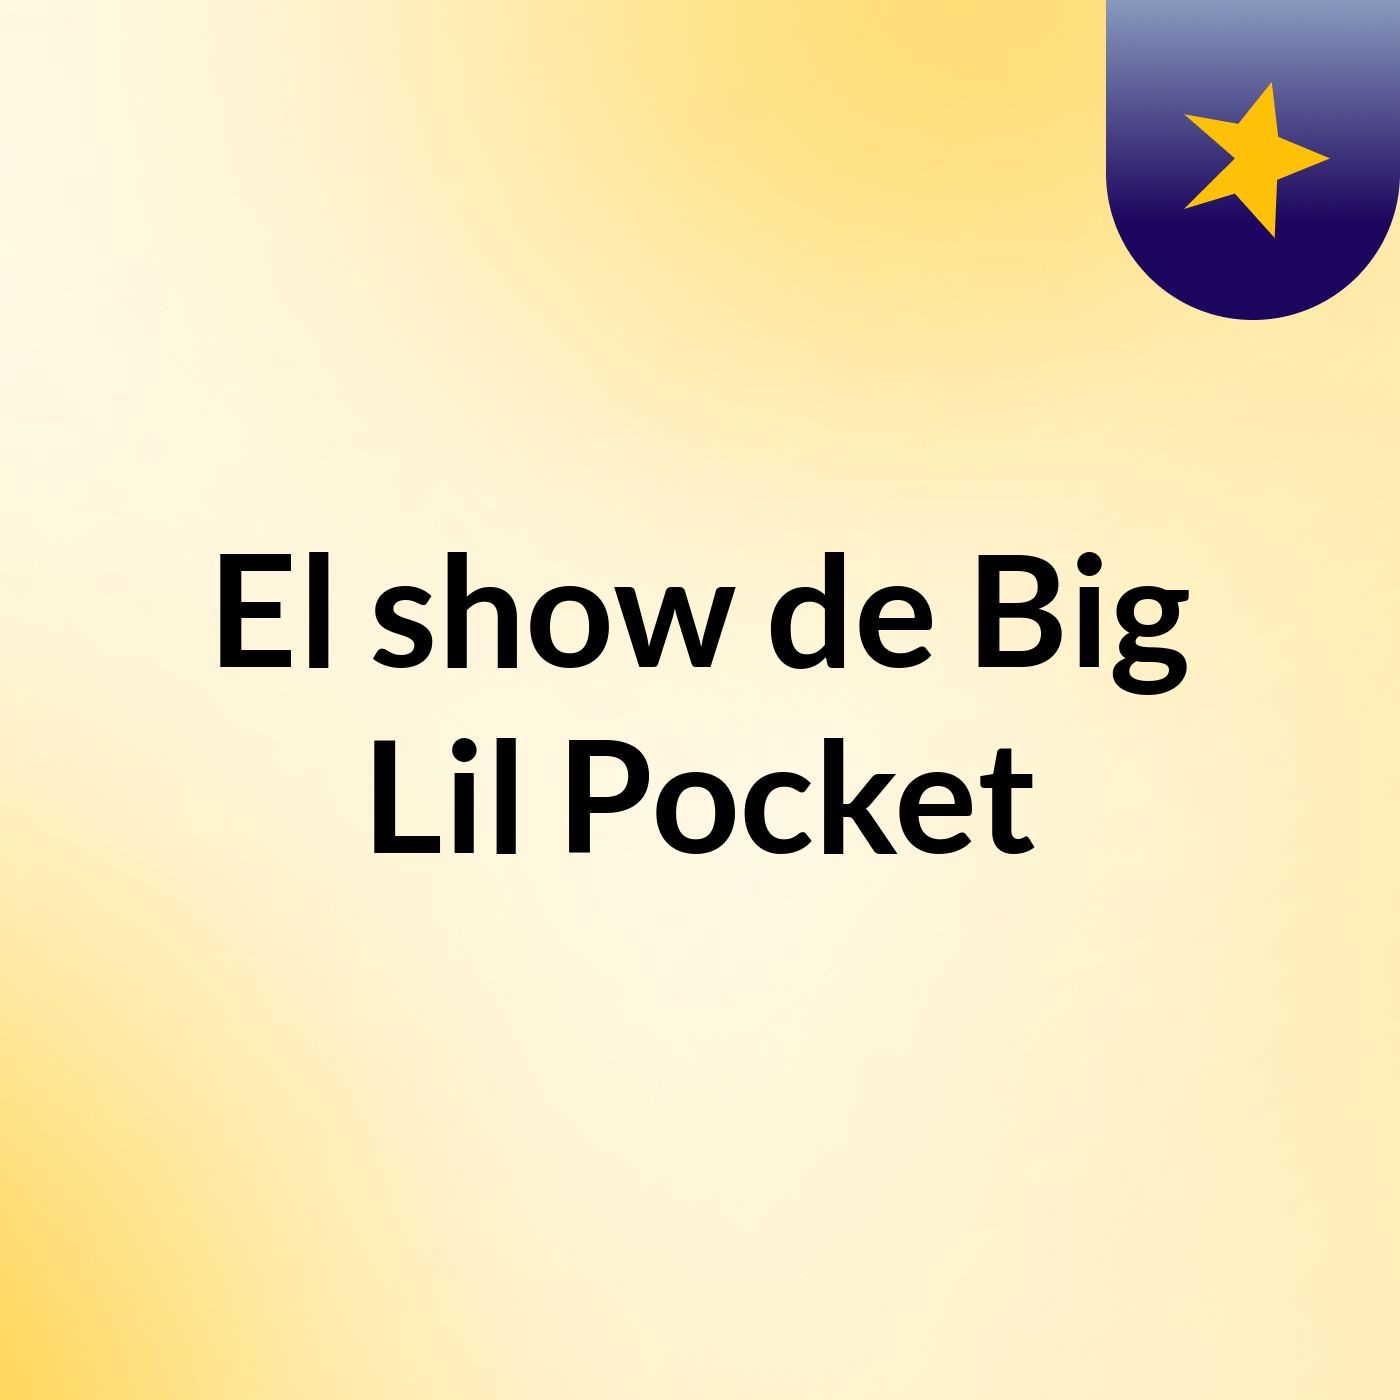 Episodio 3 - El show de Big Lil Pocket